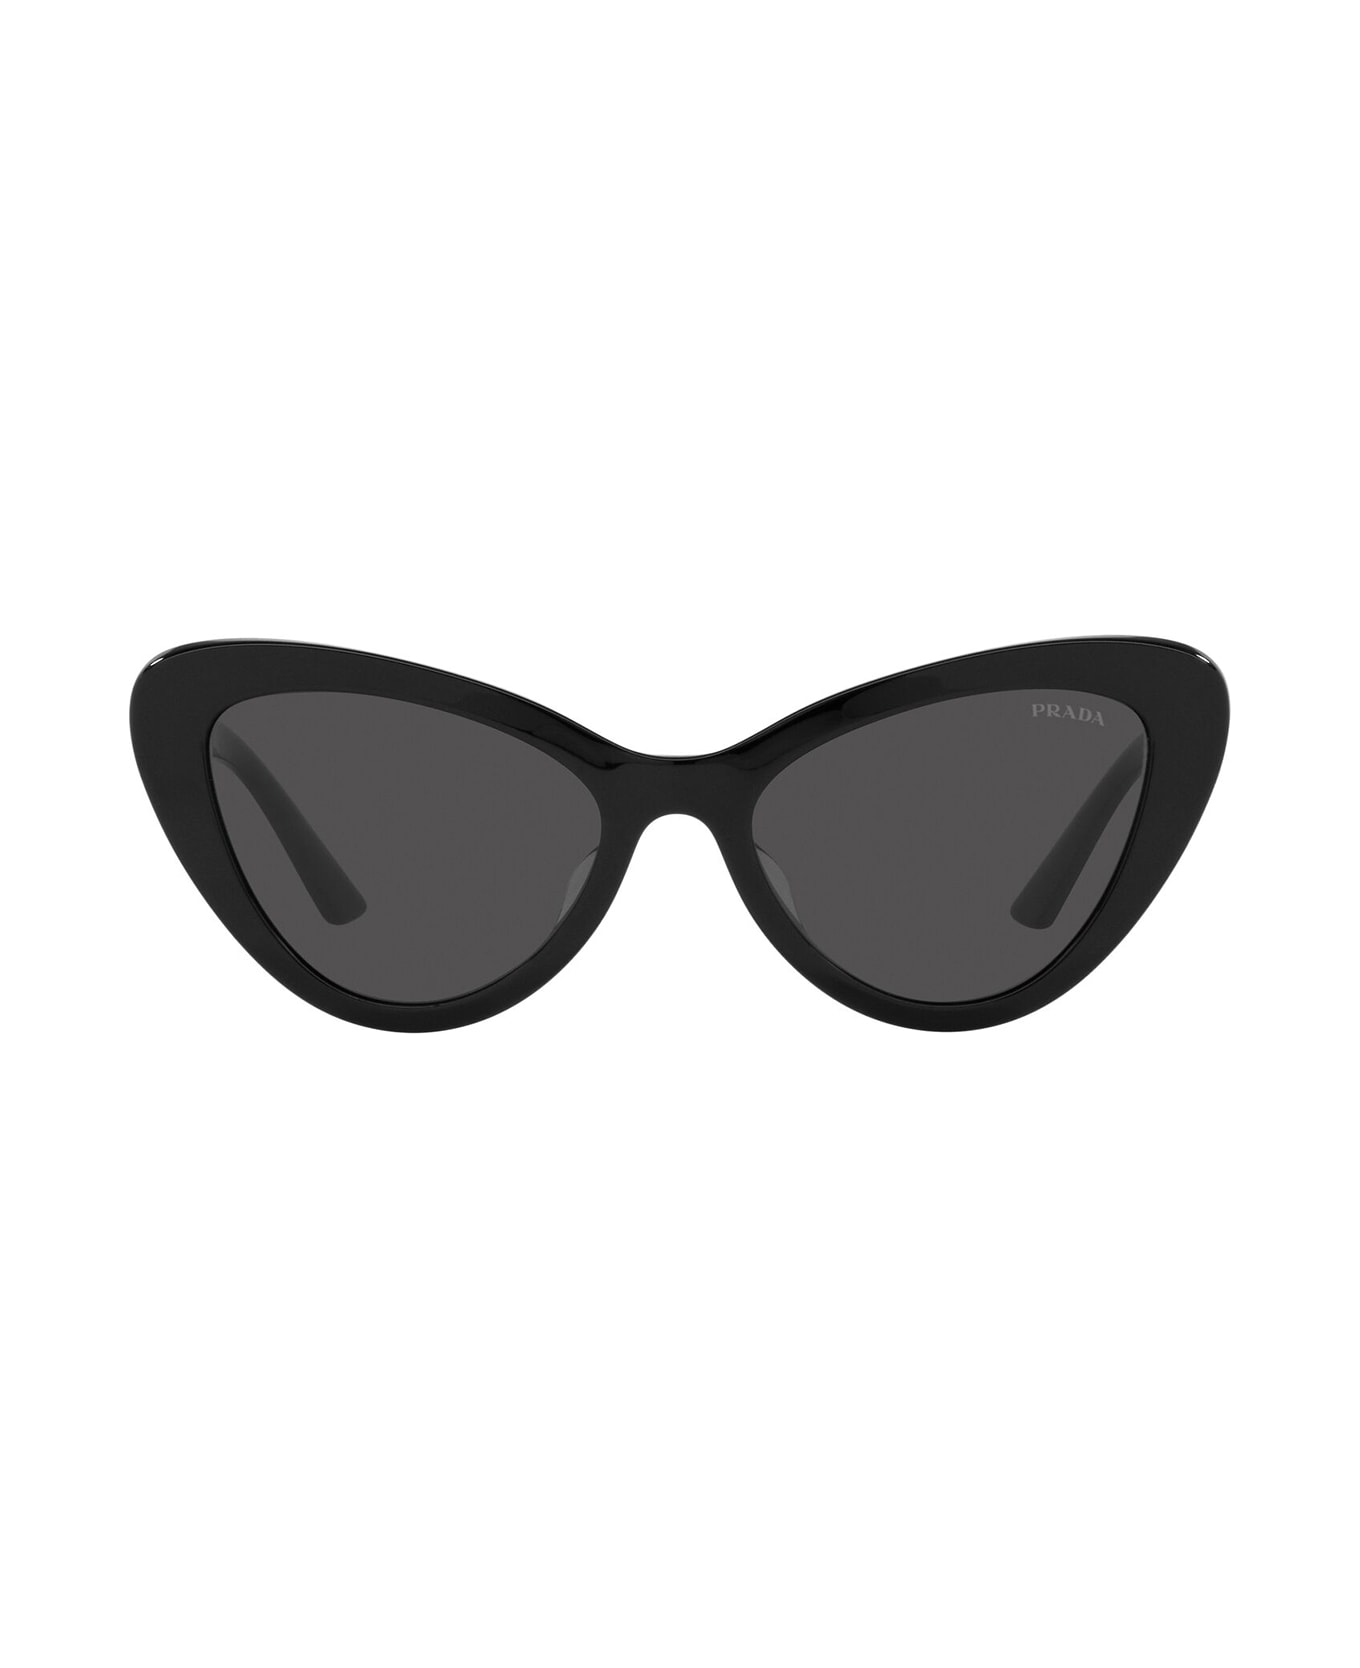 Prada Eyewear Pr 13ys Black Sunglasses - Black